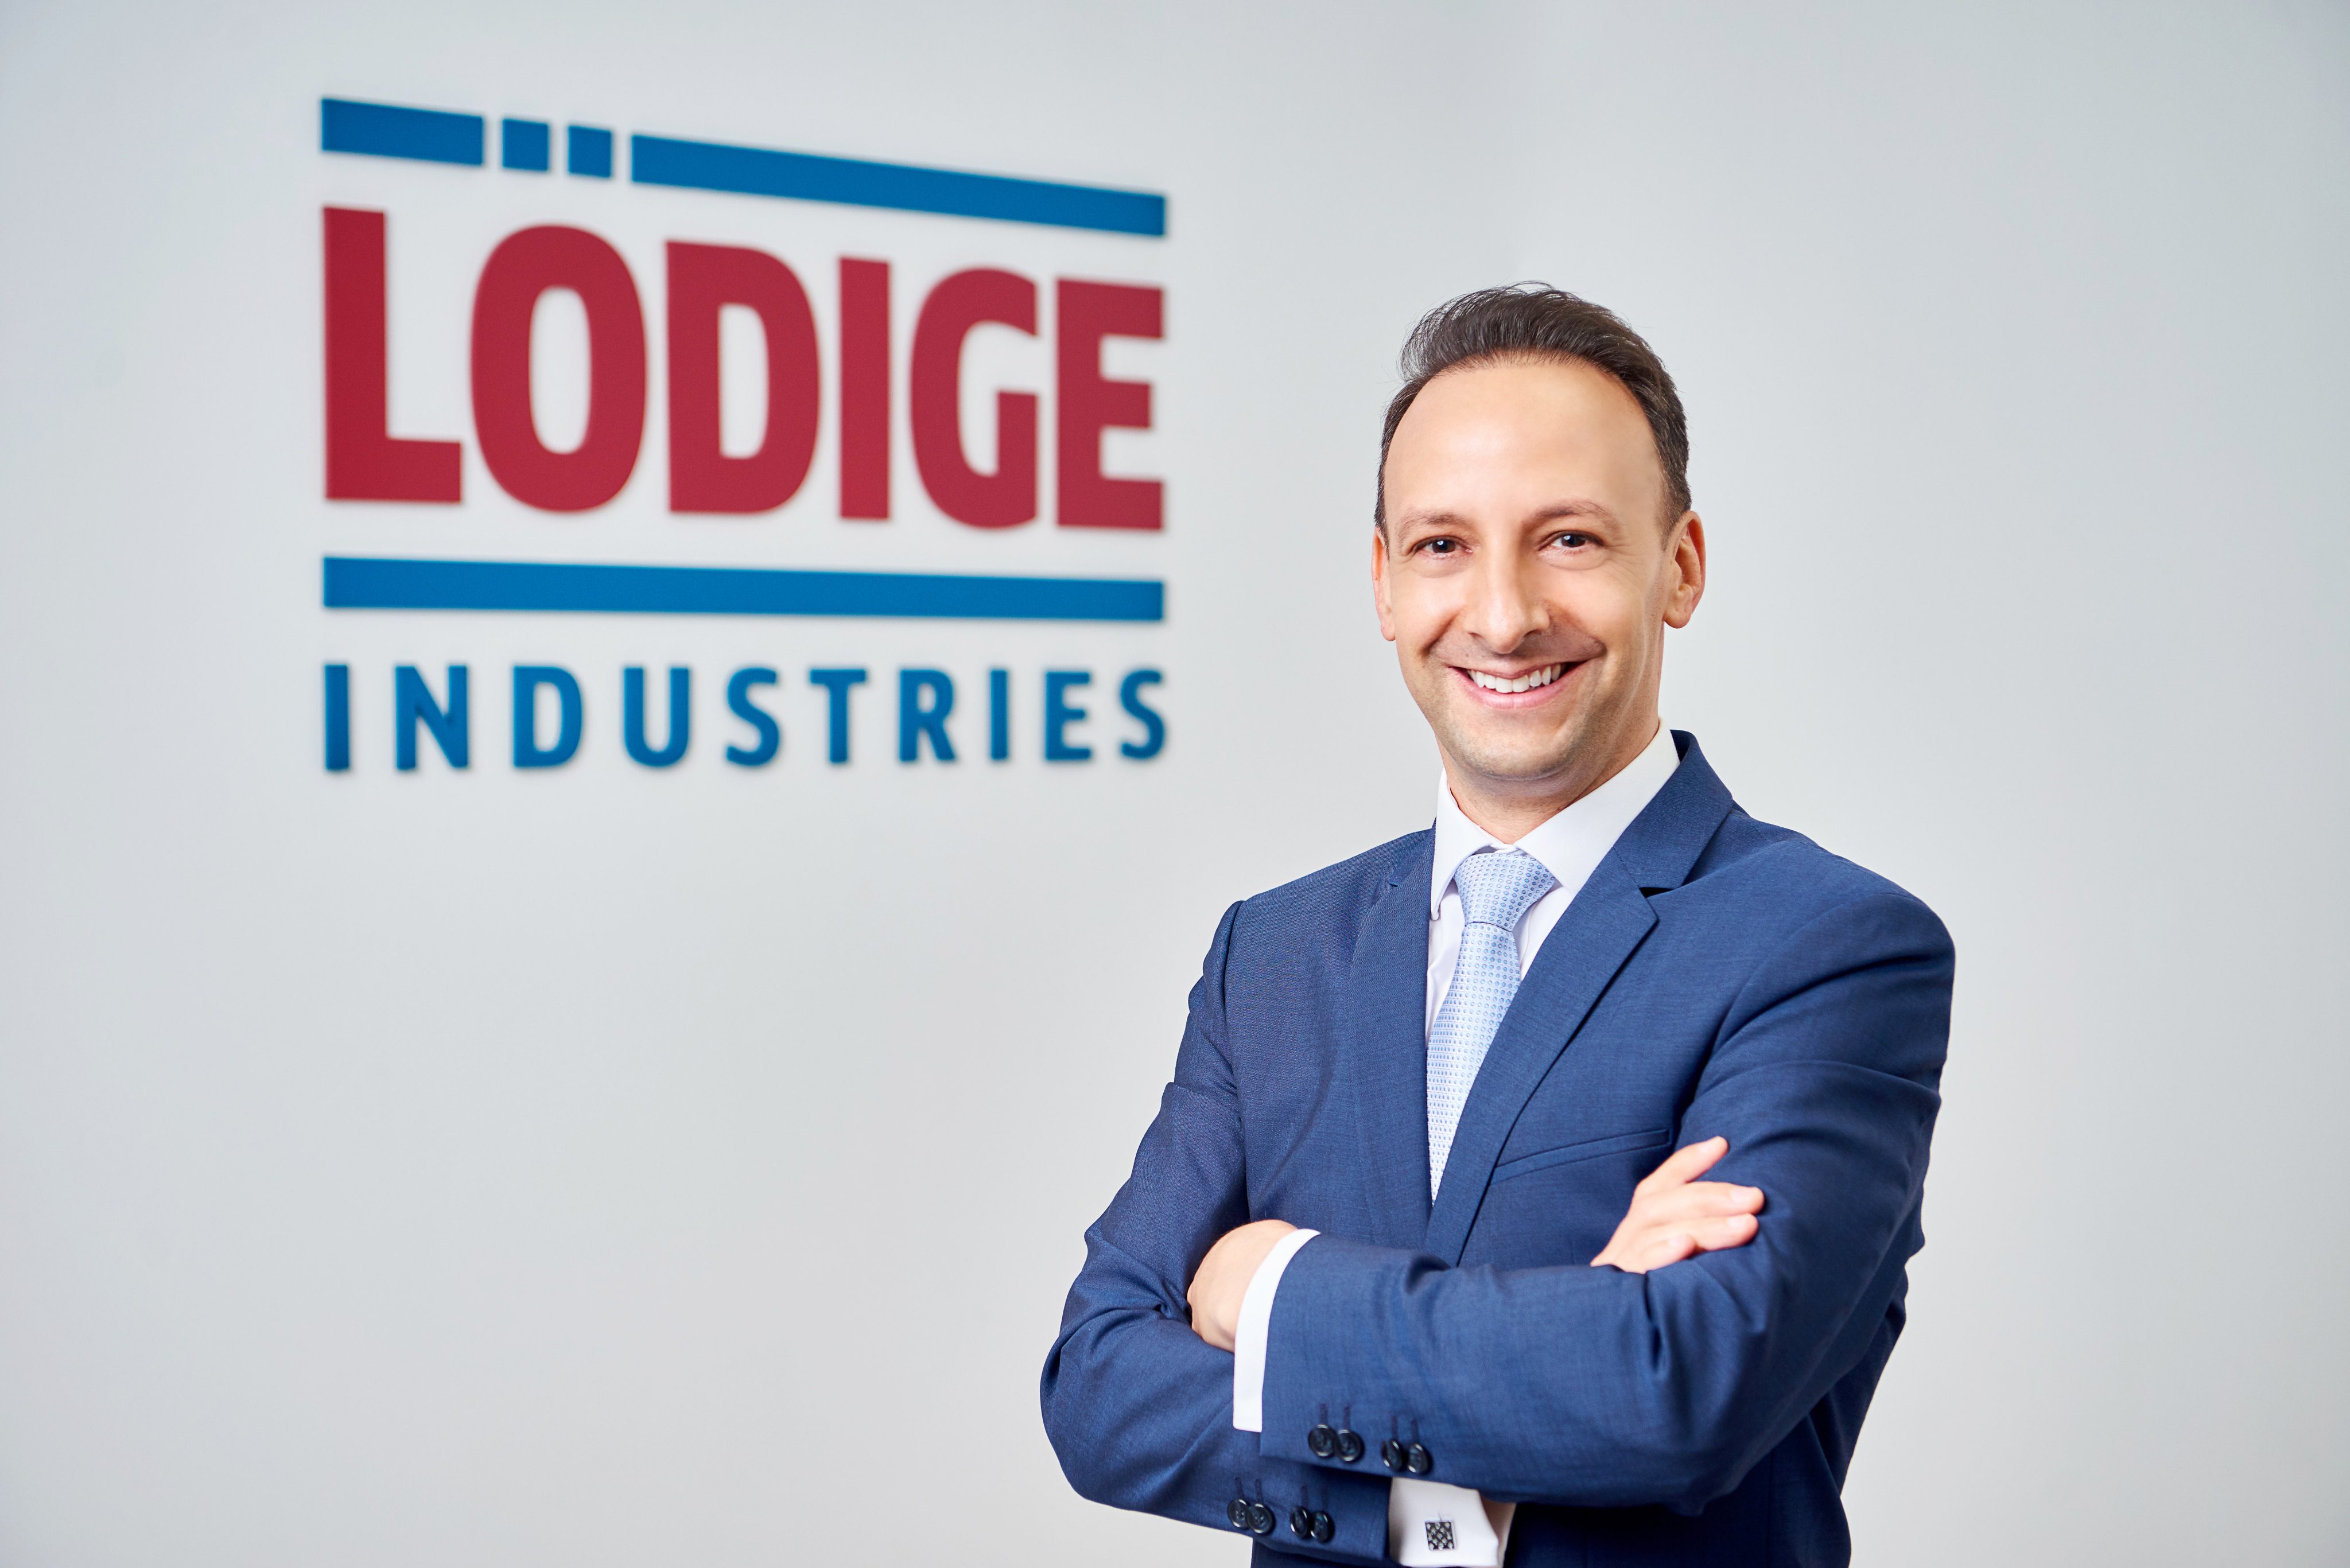 Lödige Industries’ managing director for Asia-Pacific Nicholas Tripptree